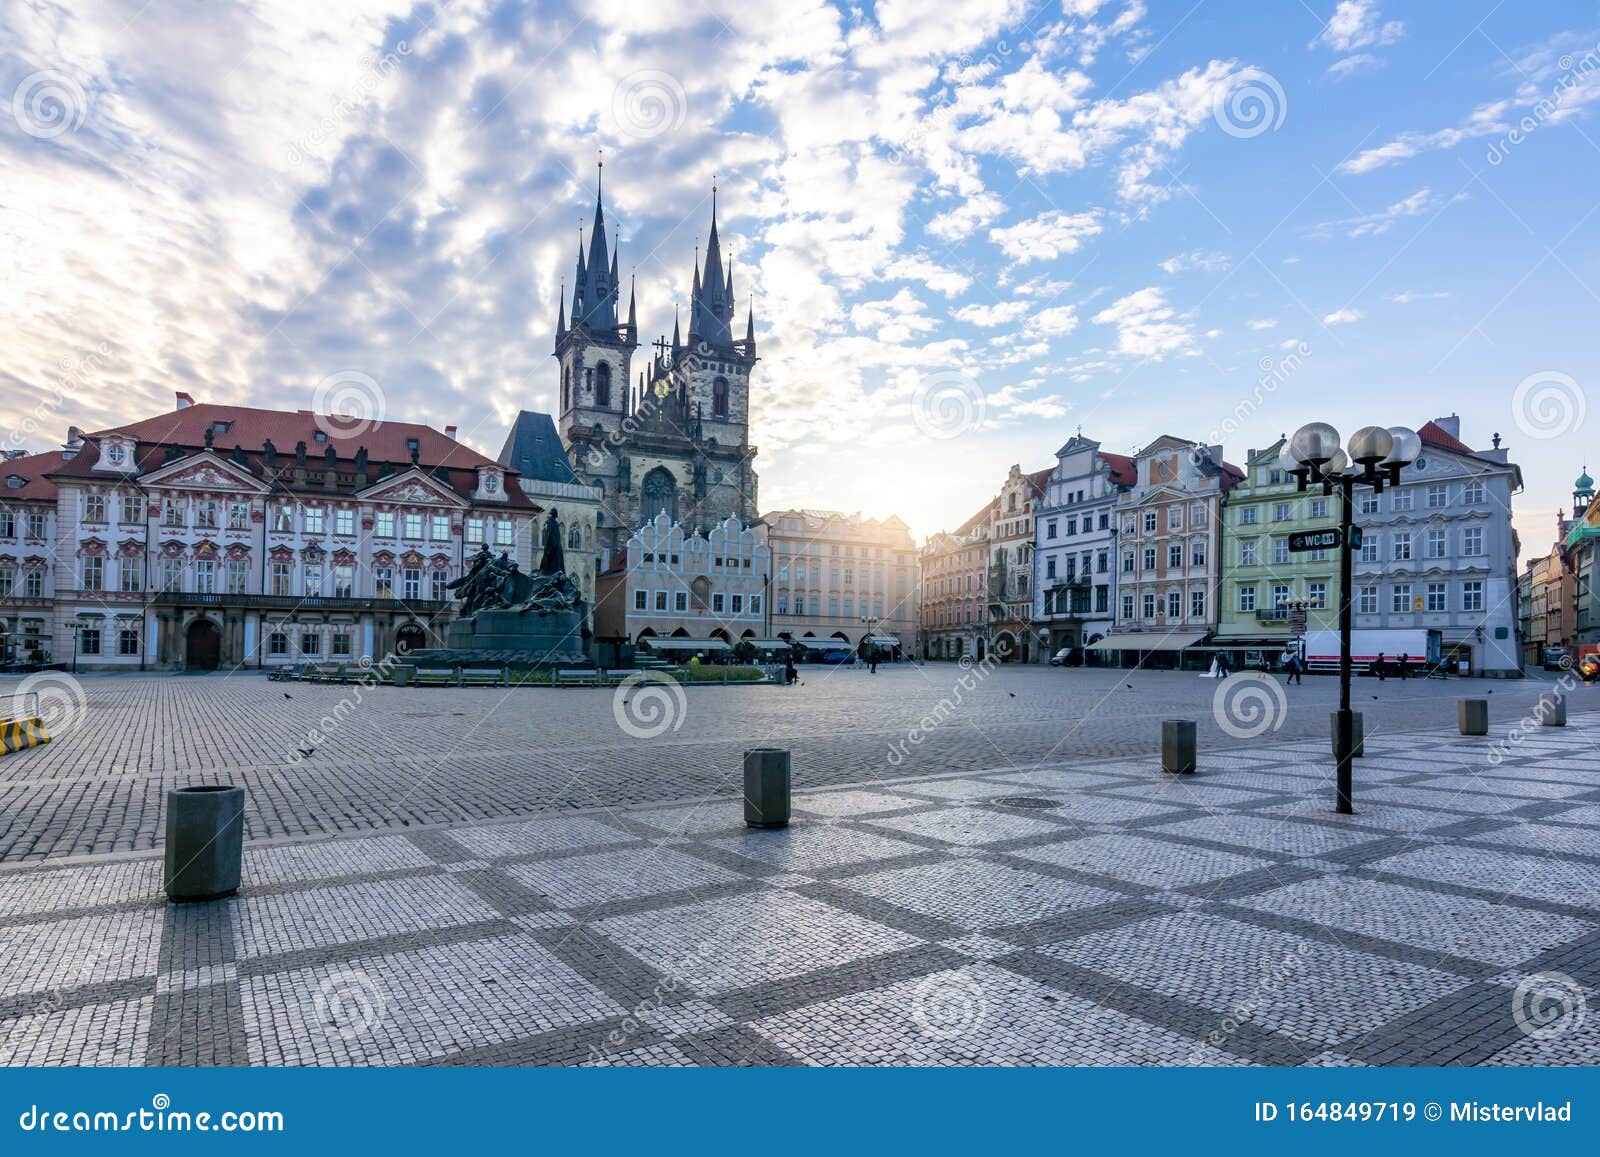 old town square staromestske namesti at sunrise, prague, czech republic